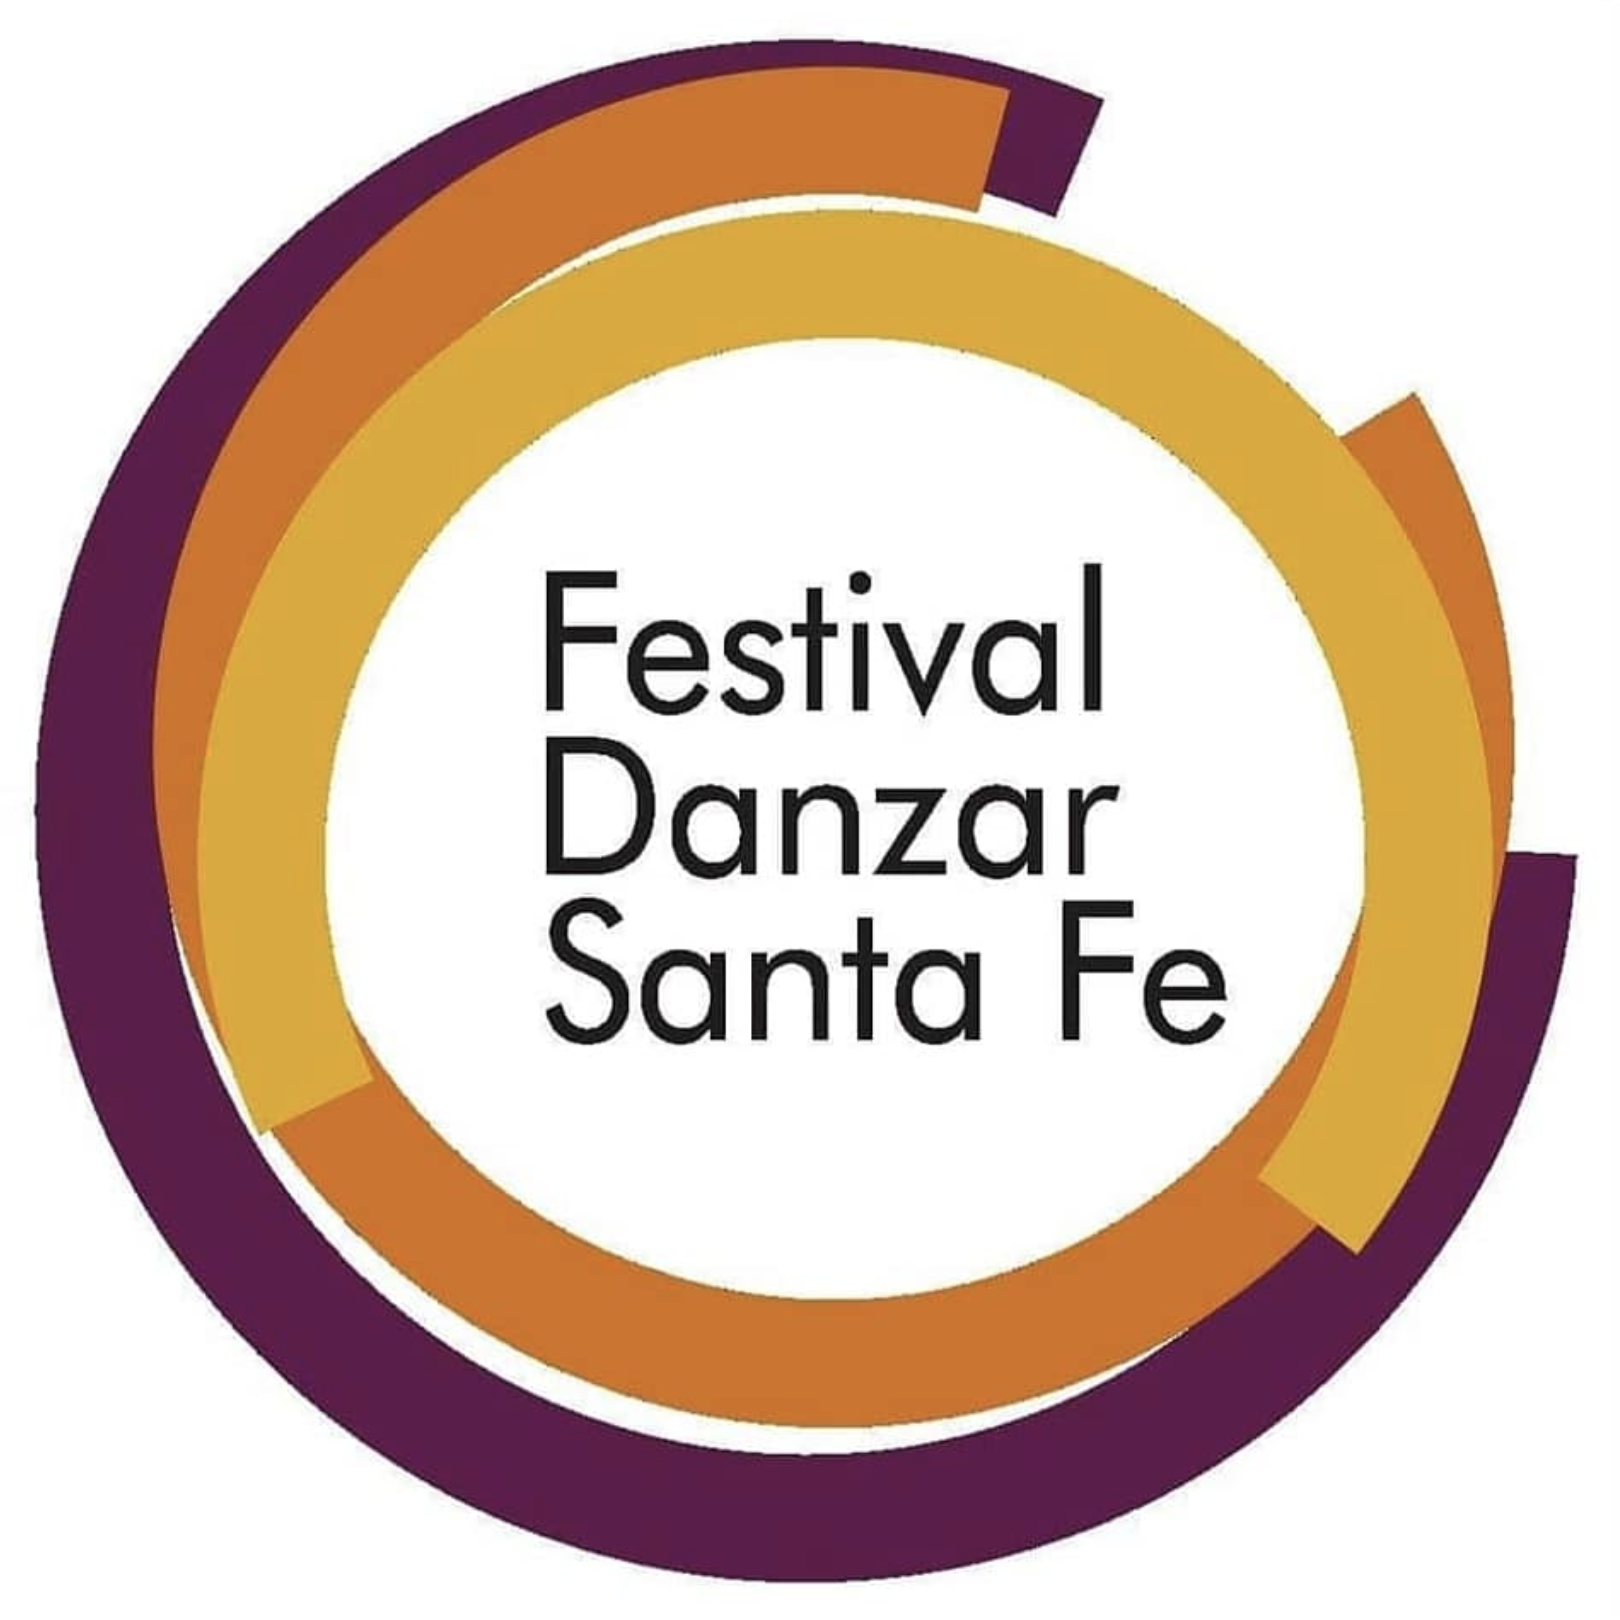 Danzar Santa Fe